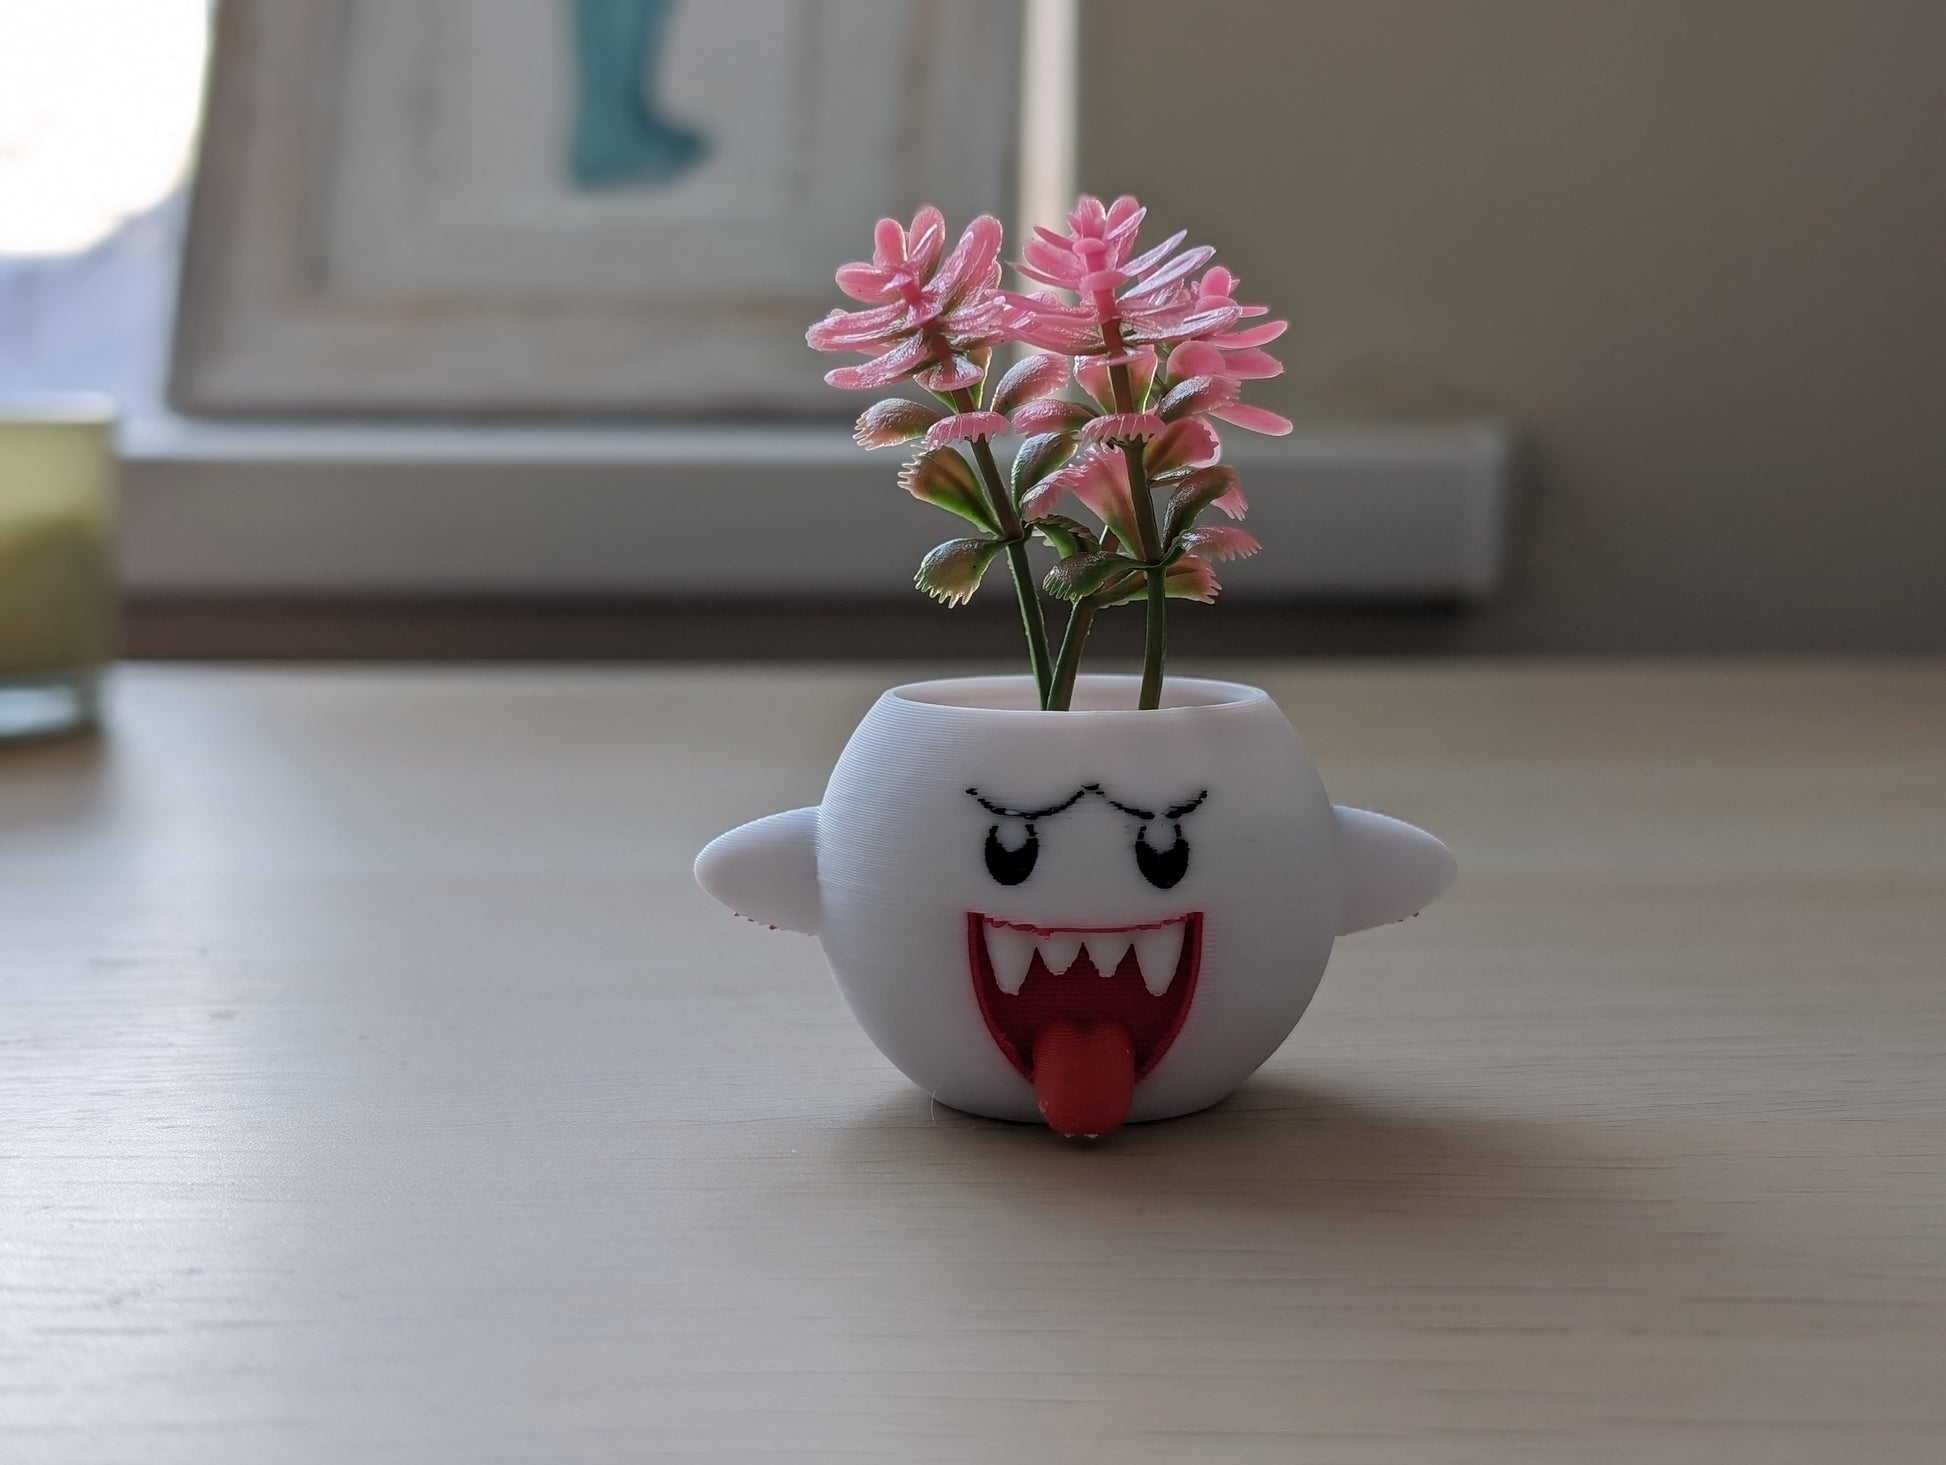 Extra small Mario Boo planter on the desk